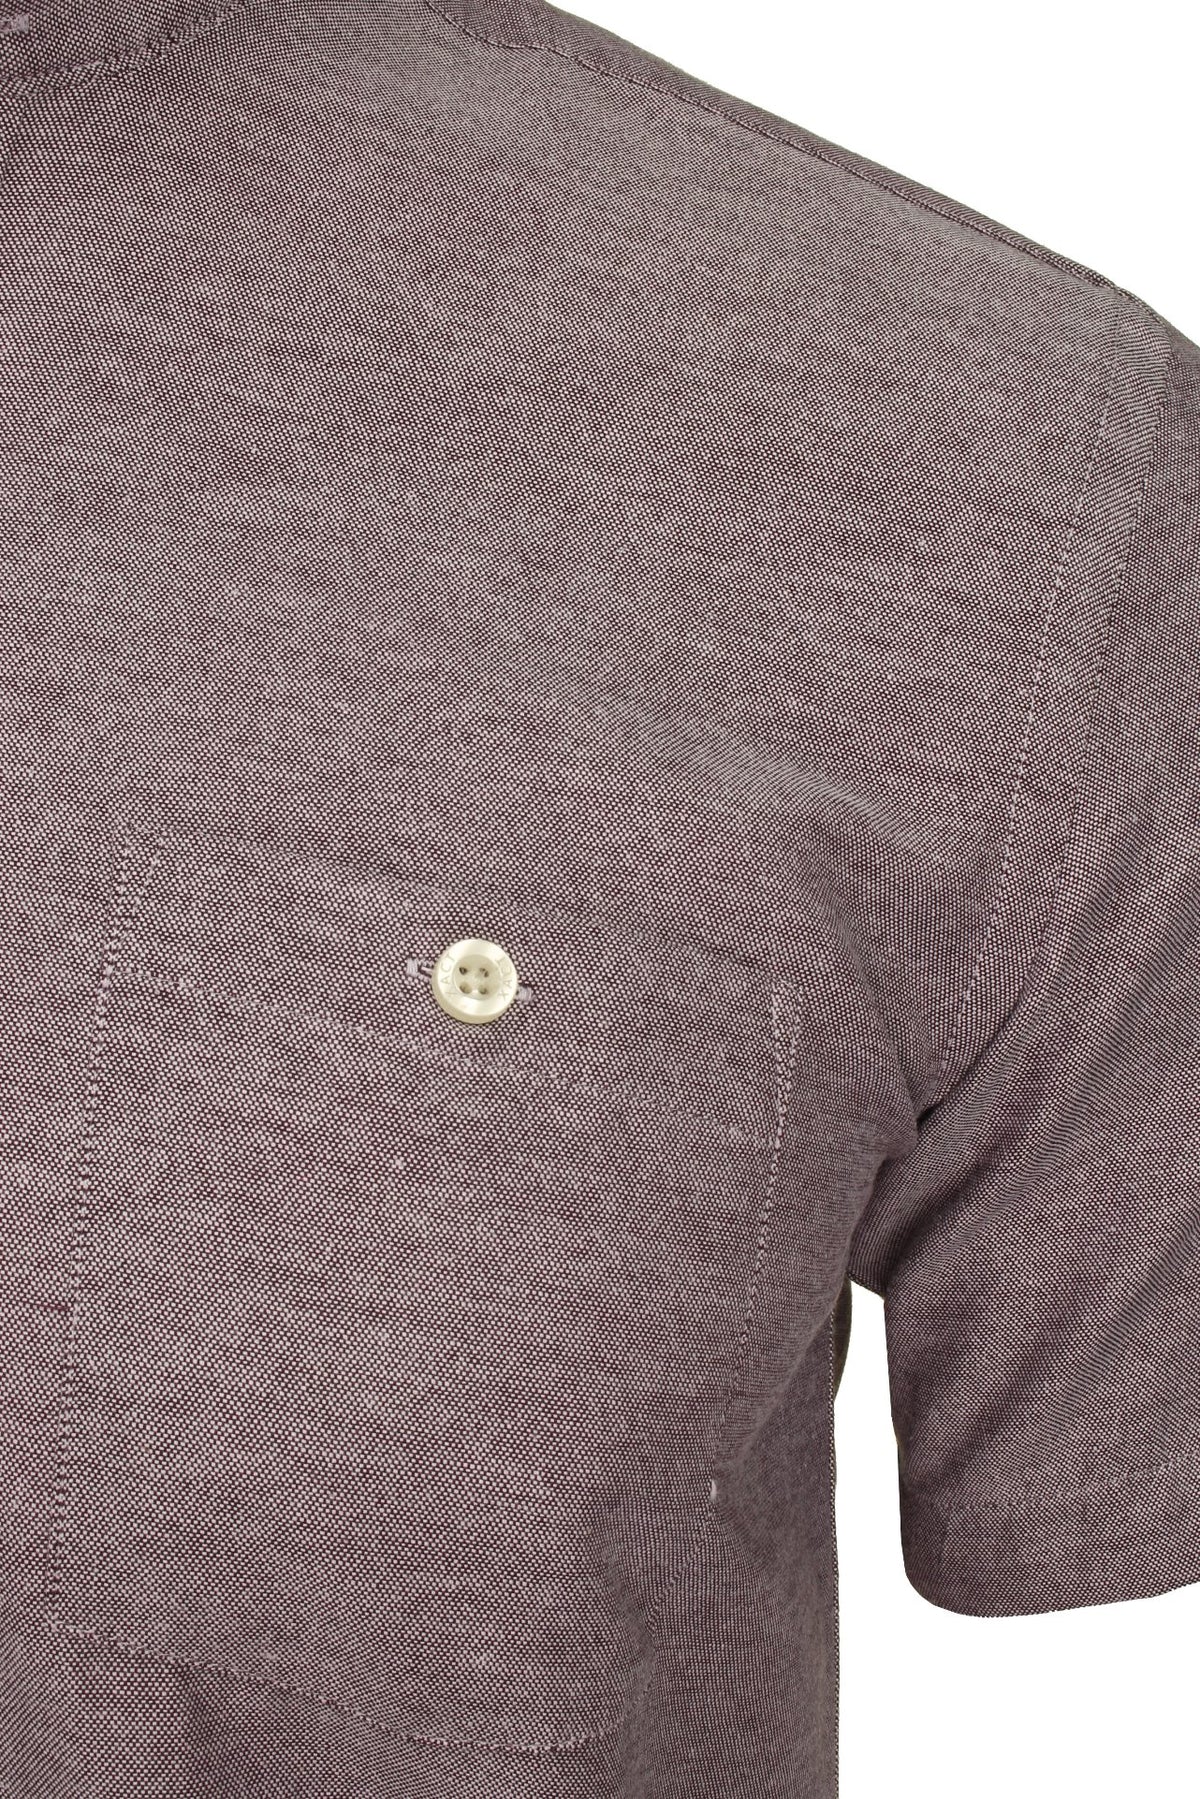 Xact Men's Grandad Collar Oxford Shirt Slim Fit Short Sleeved, 02, Xsh1022, Light Burgundy